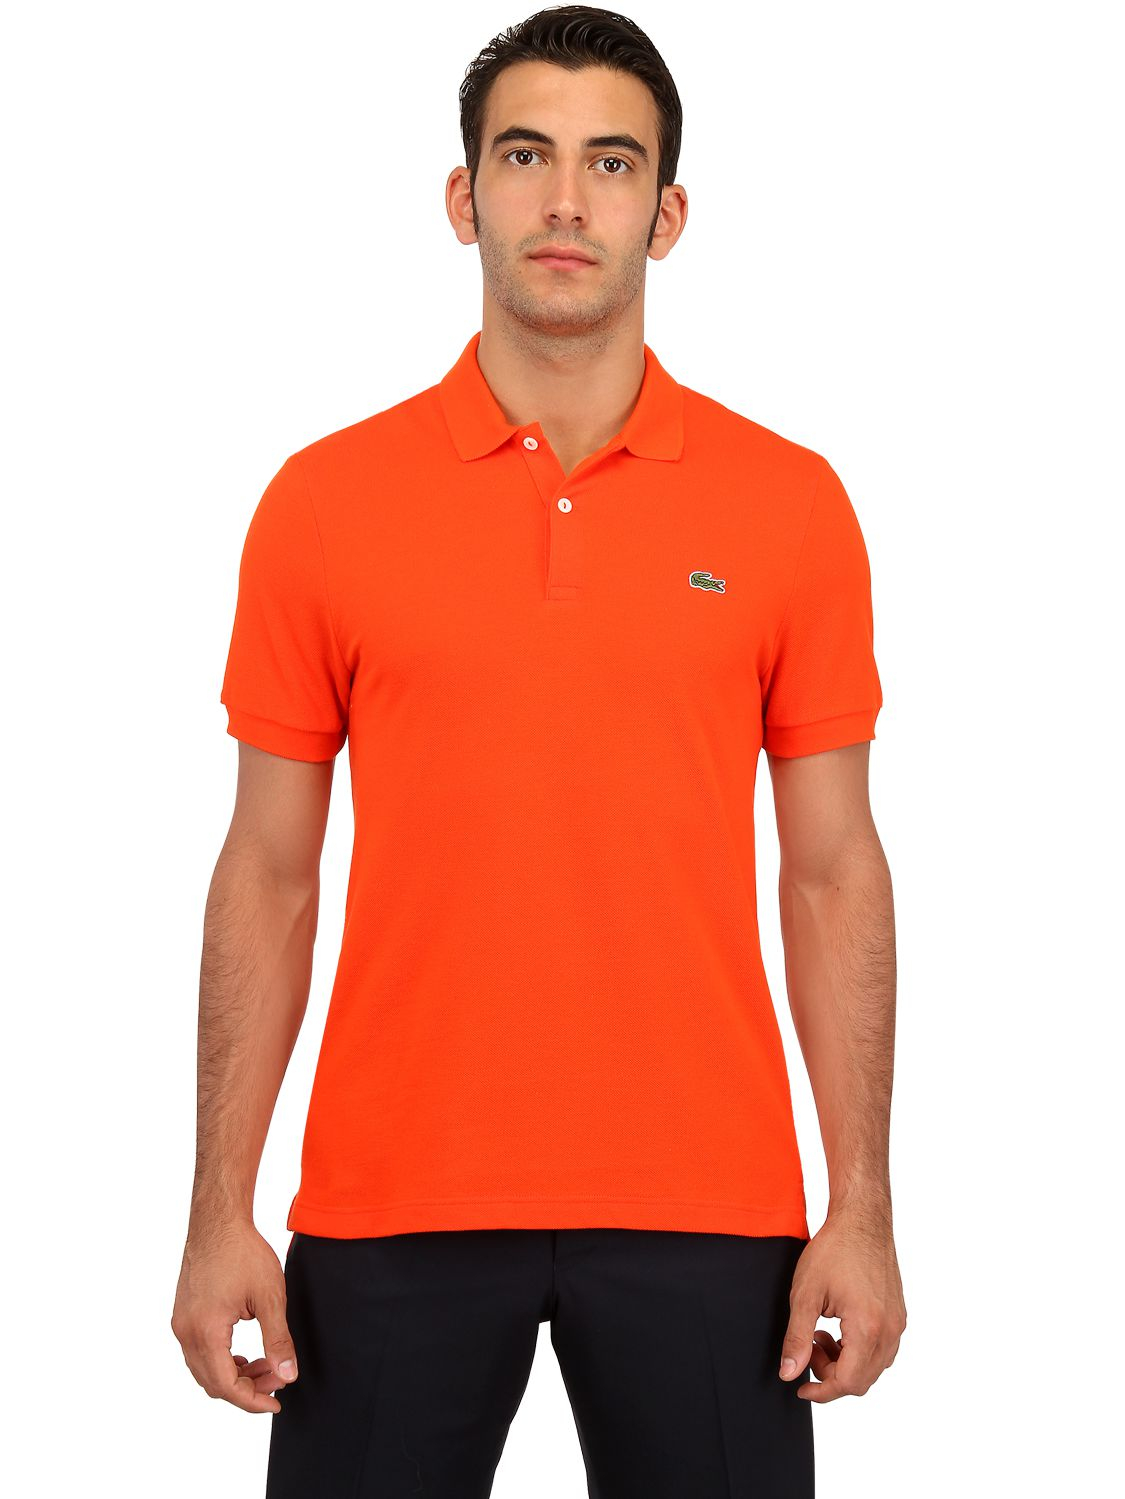 Lacoste Petit Piqué Polo Shirt in Neon Orange (Orange) for Men - Lyst